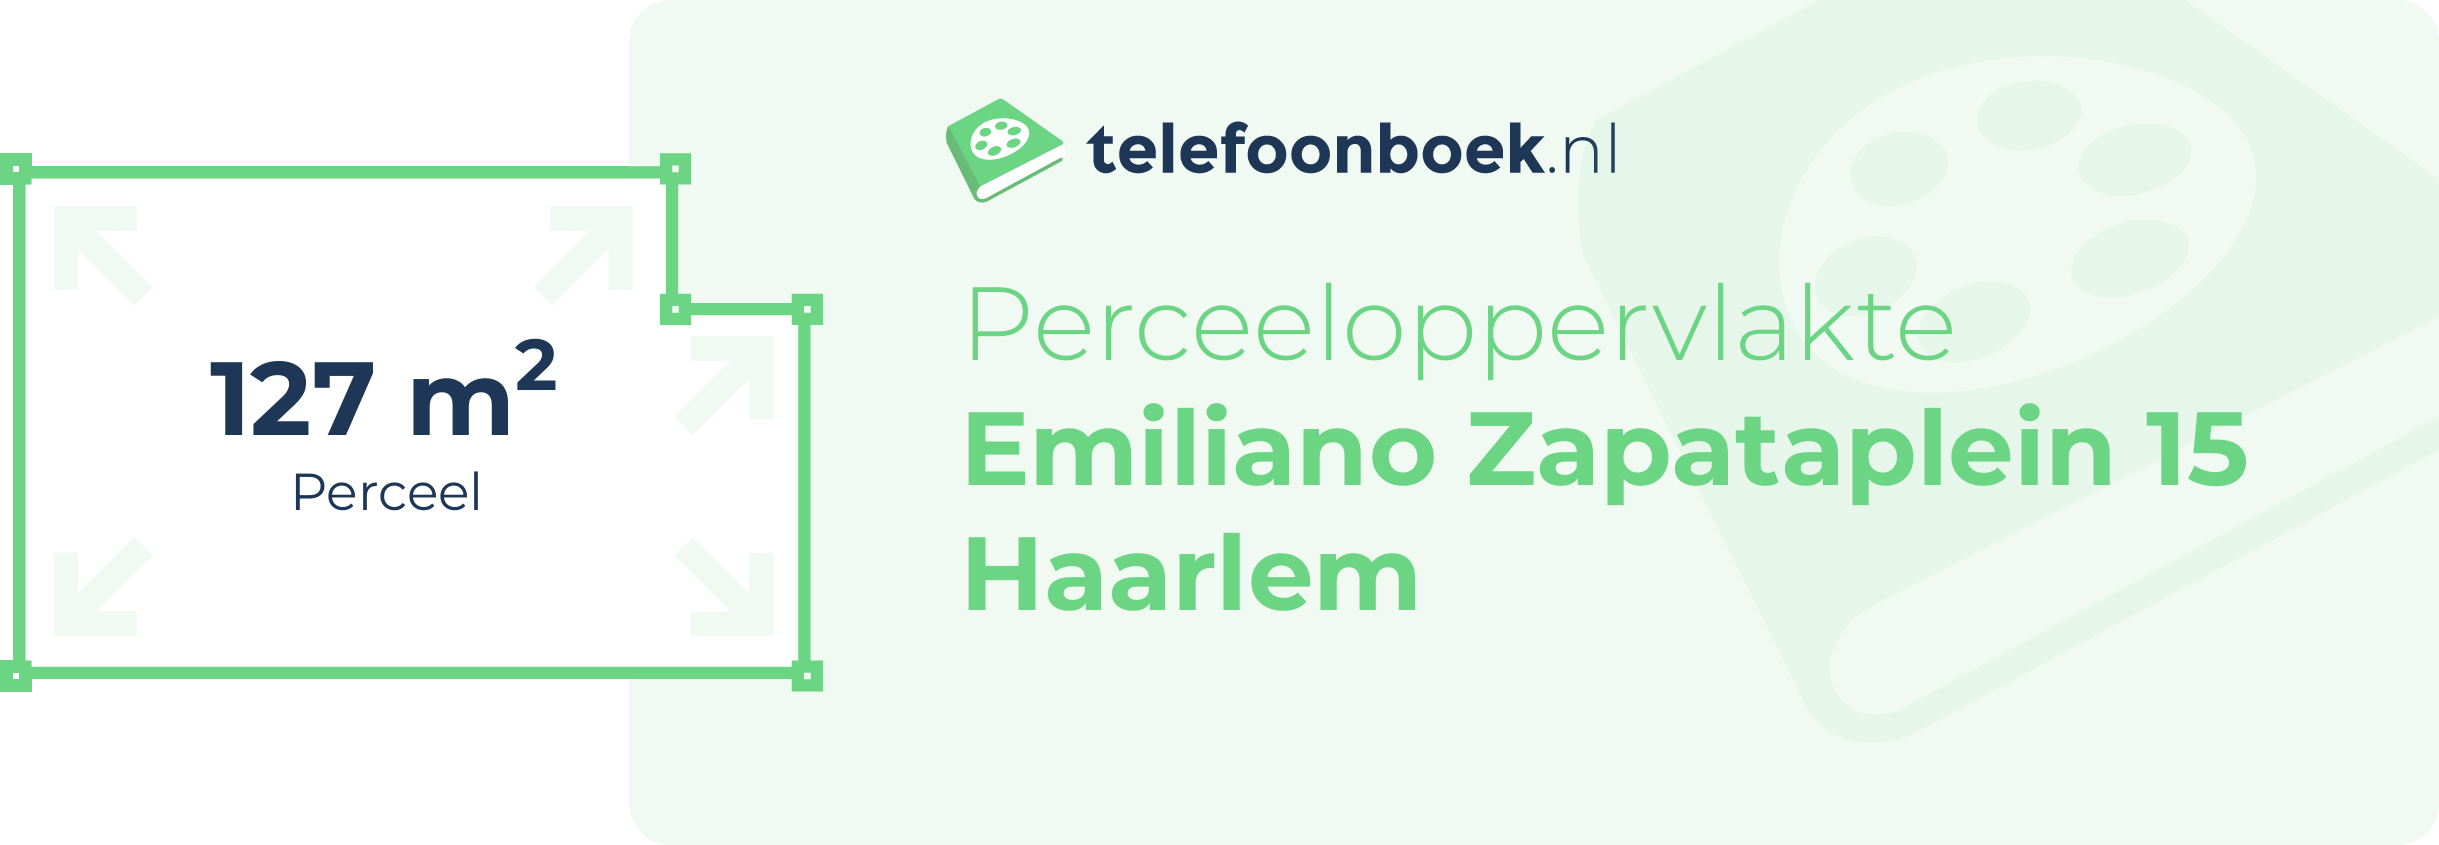 Perceeloppervlakte Emiliano Zapataplein 15 Haarlem